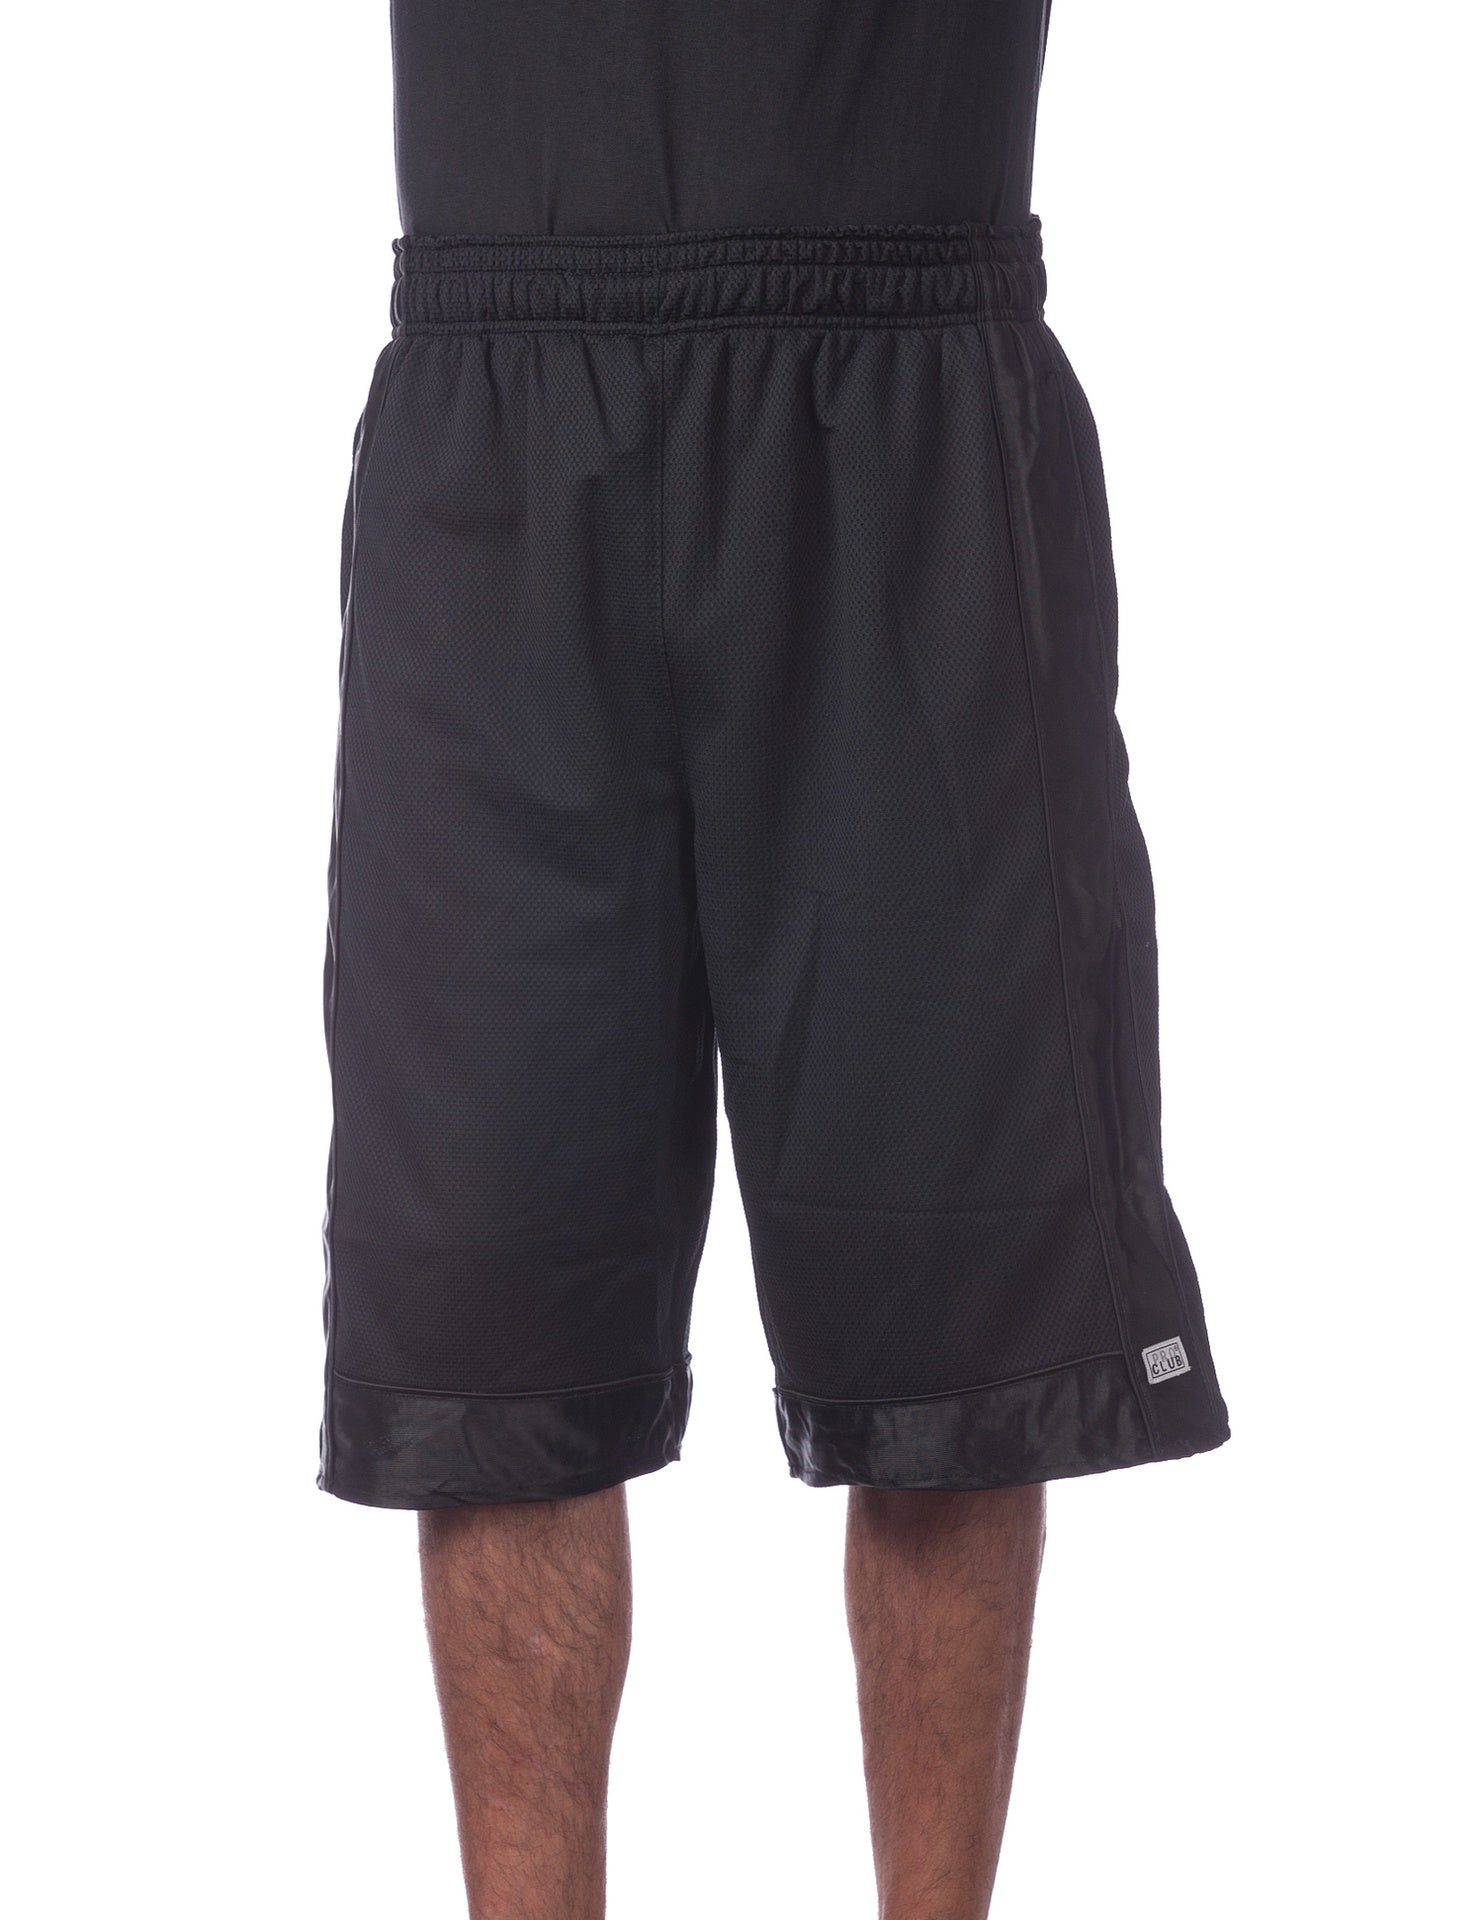 Pro Club - Heavyweight Mesh Basketball Shorts - Black